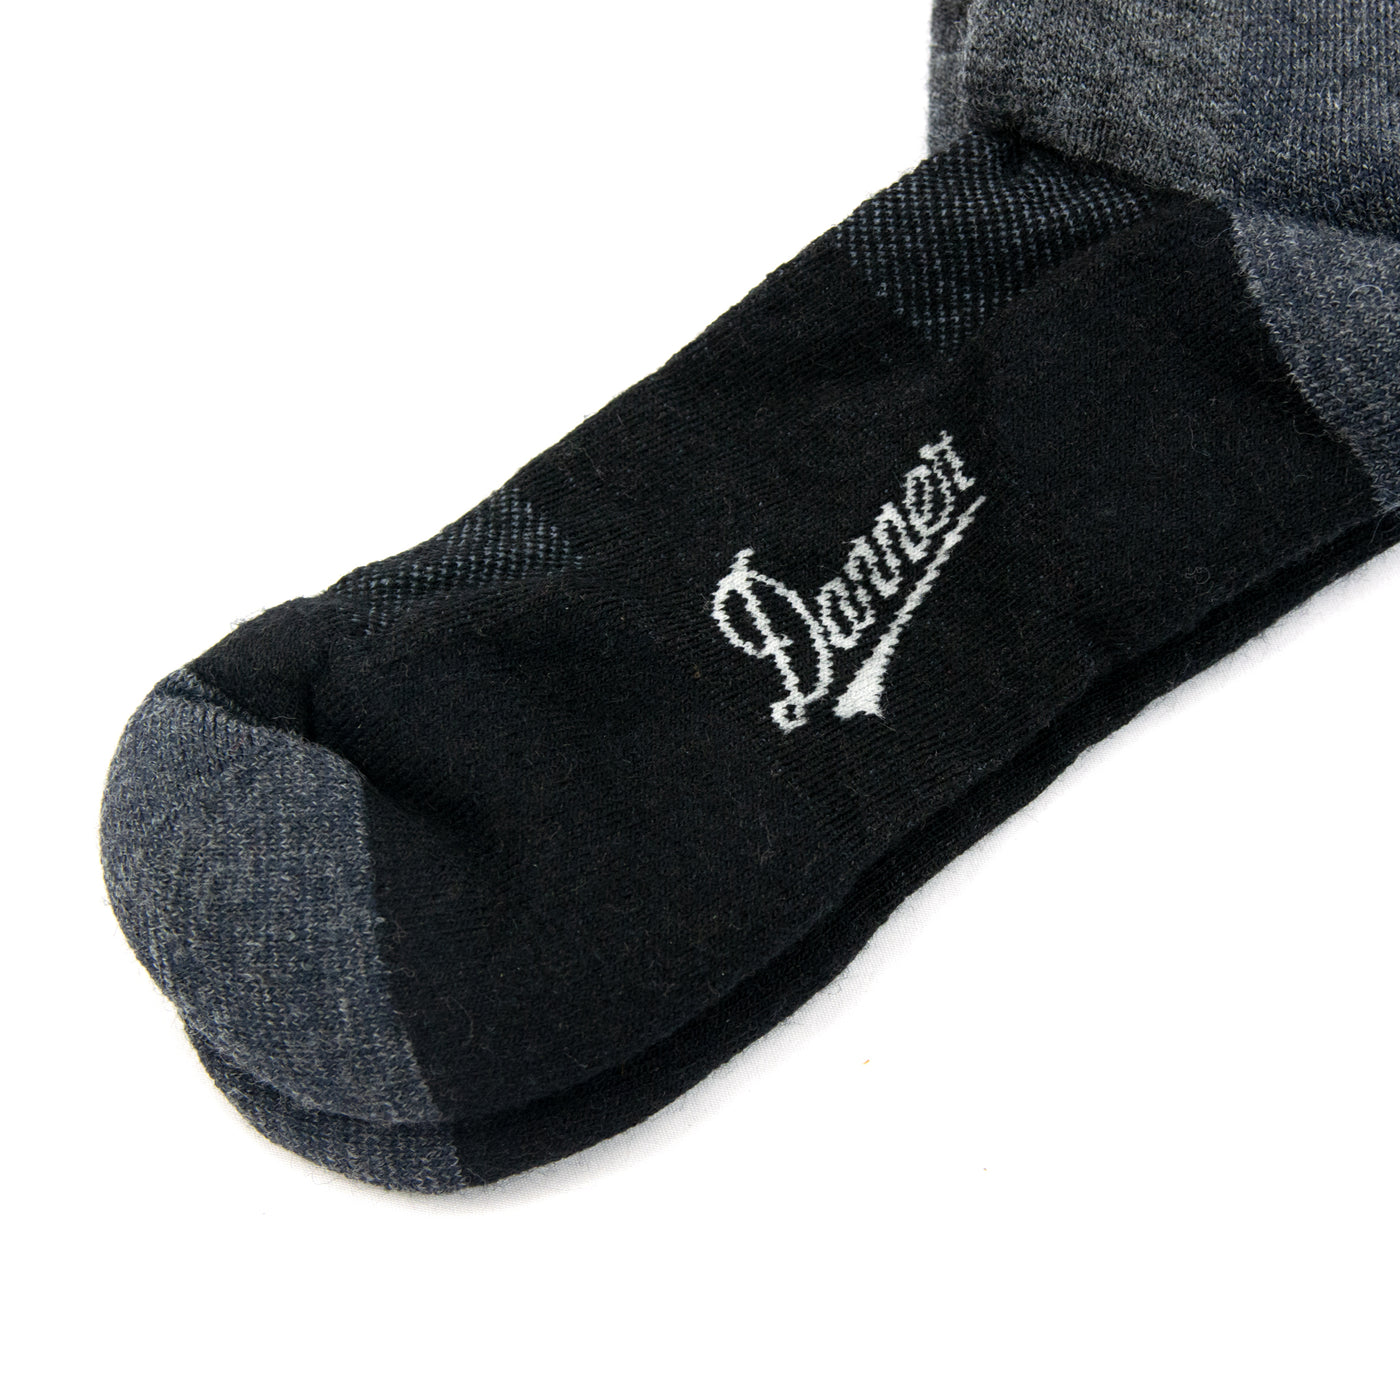 Danner Bull Run Lightweight Technical Merino Sock Black / Grey TOE